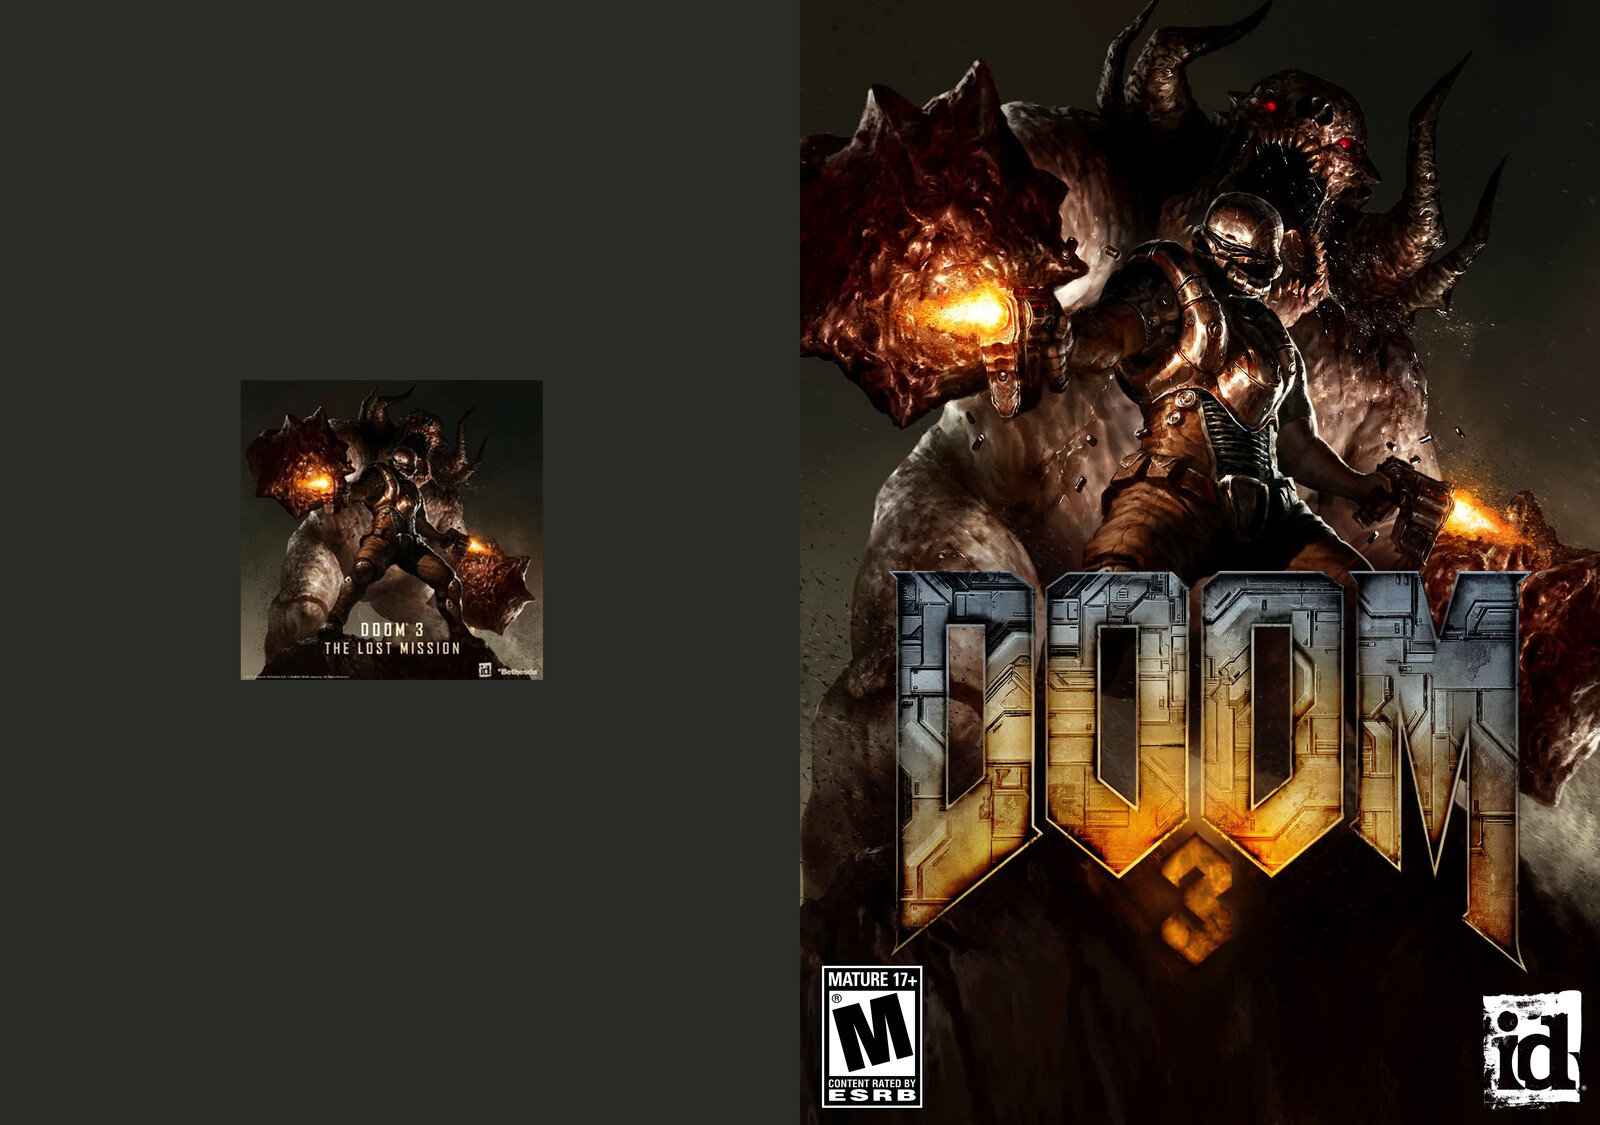 Doom 3 (alternative coverart by John Carmack) (original cover vs. retouched)